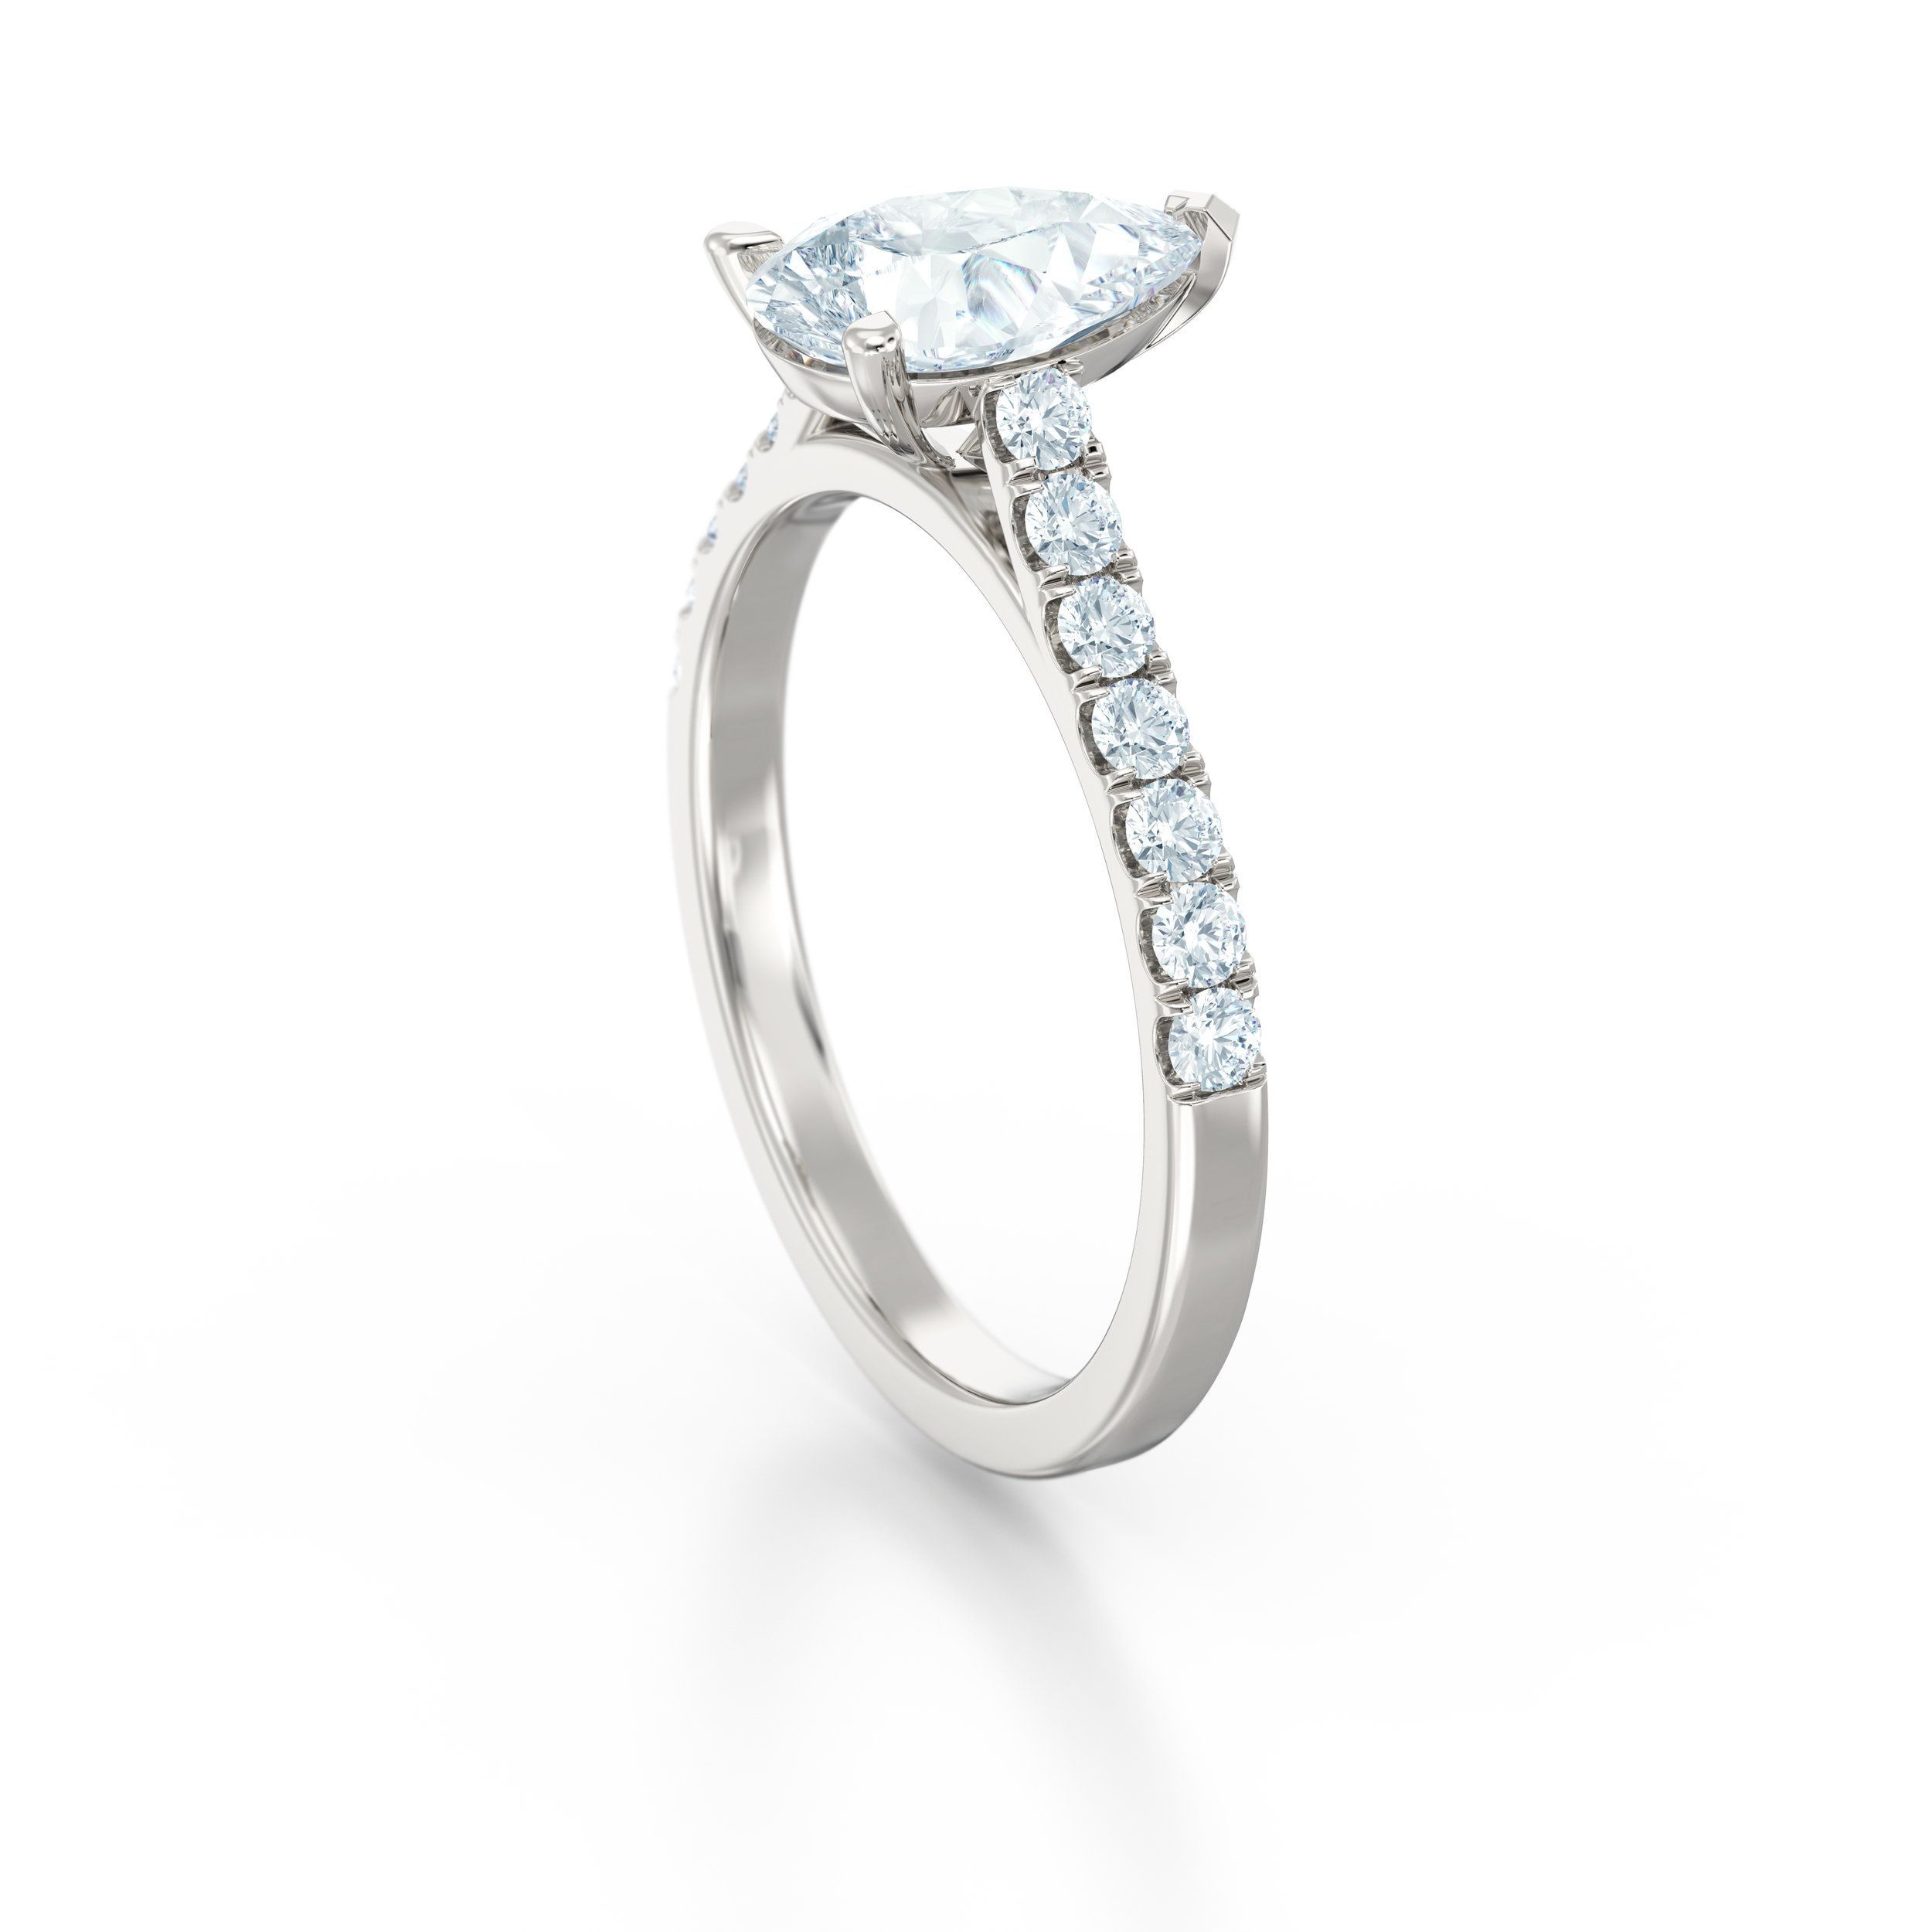 Pear shape diamond shoulder engagement ring